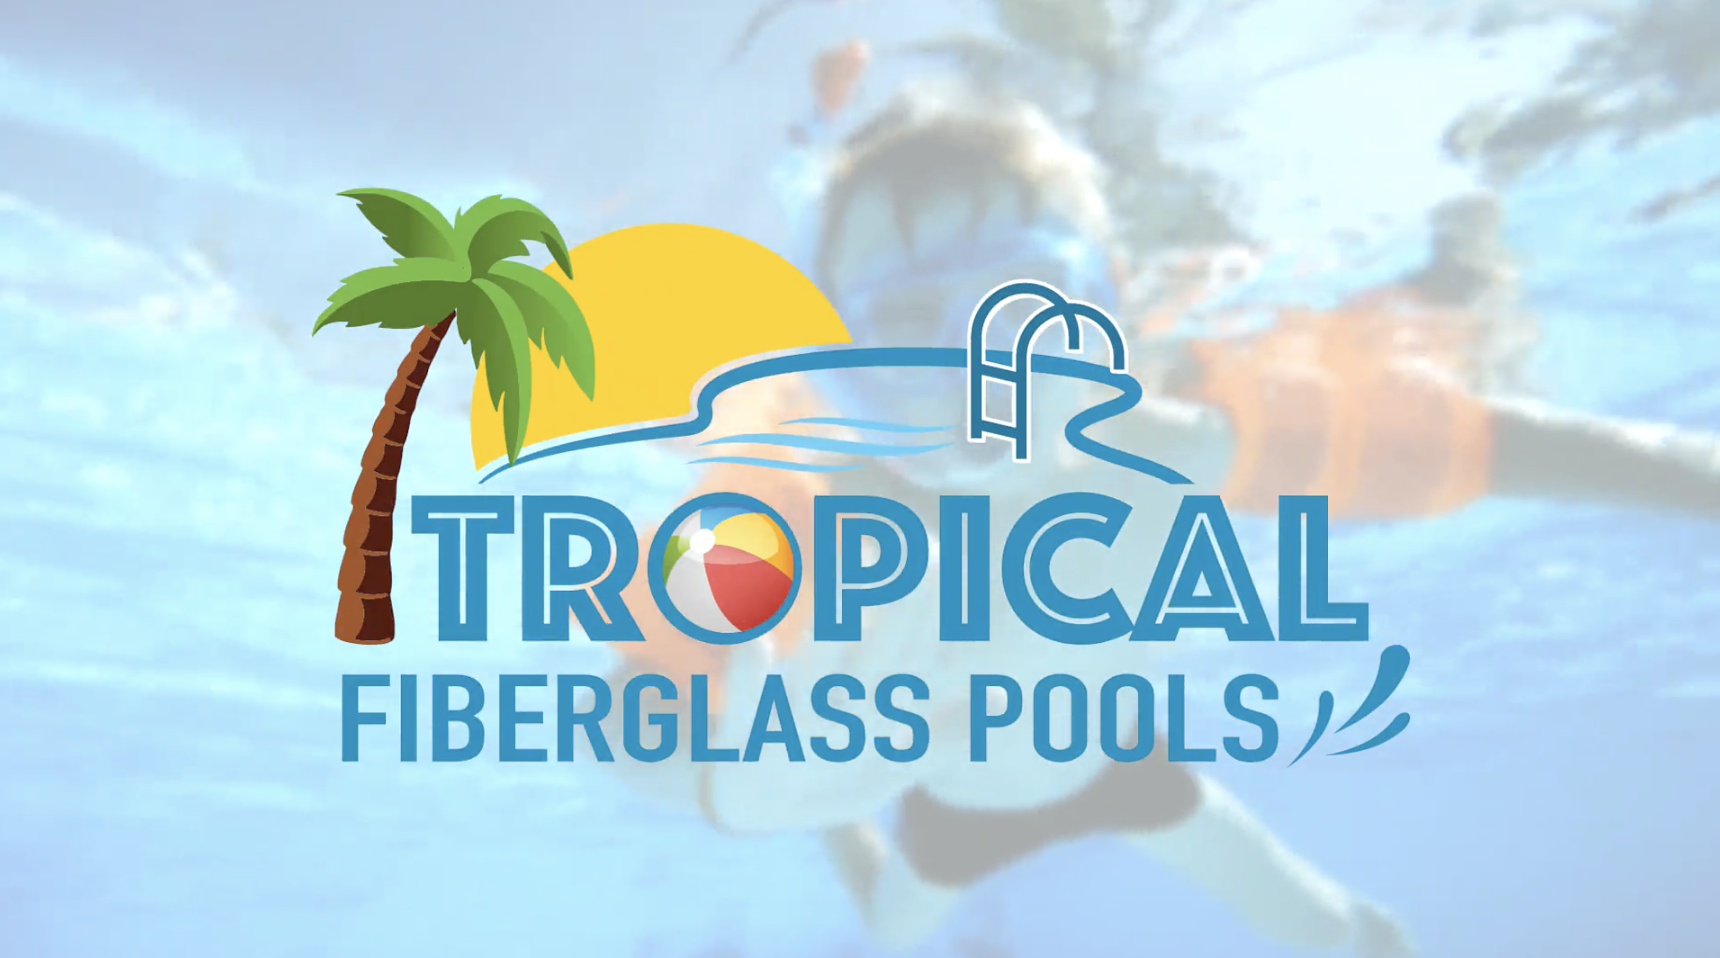 Tropical Fiberglass Pools